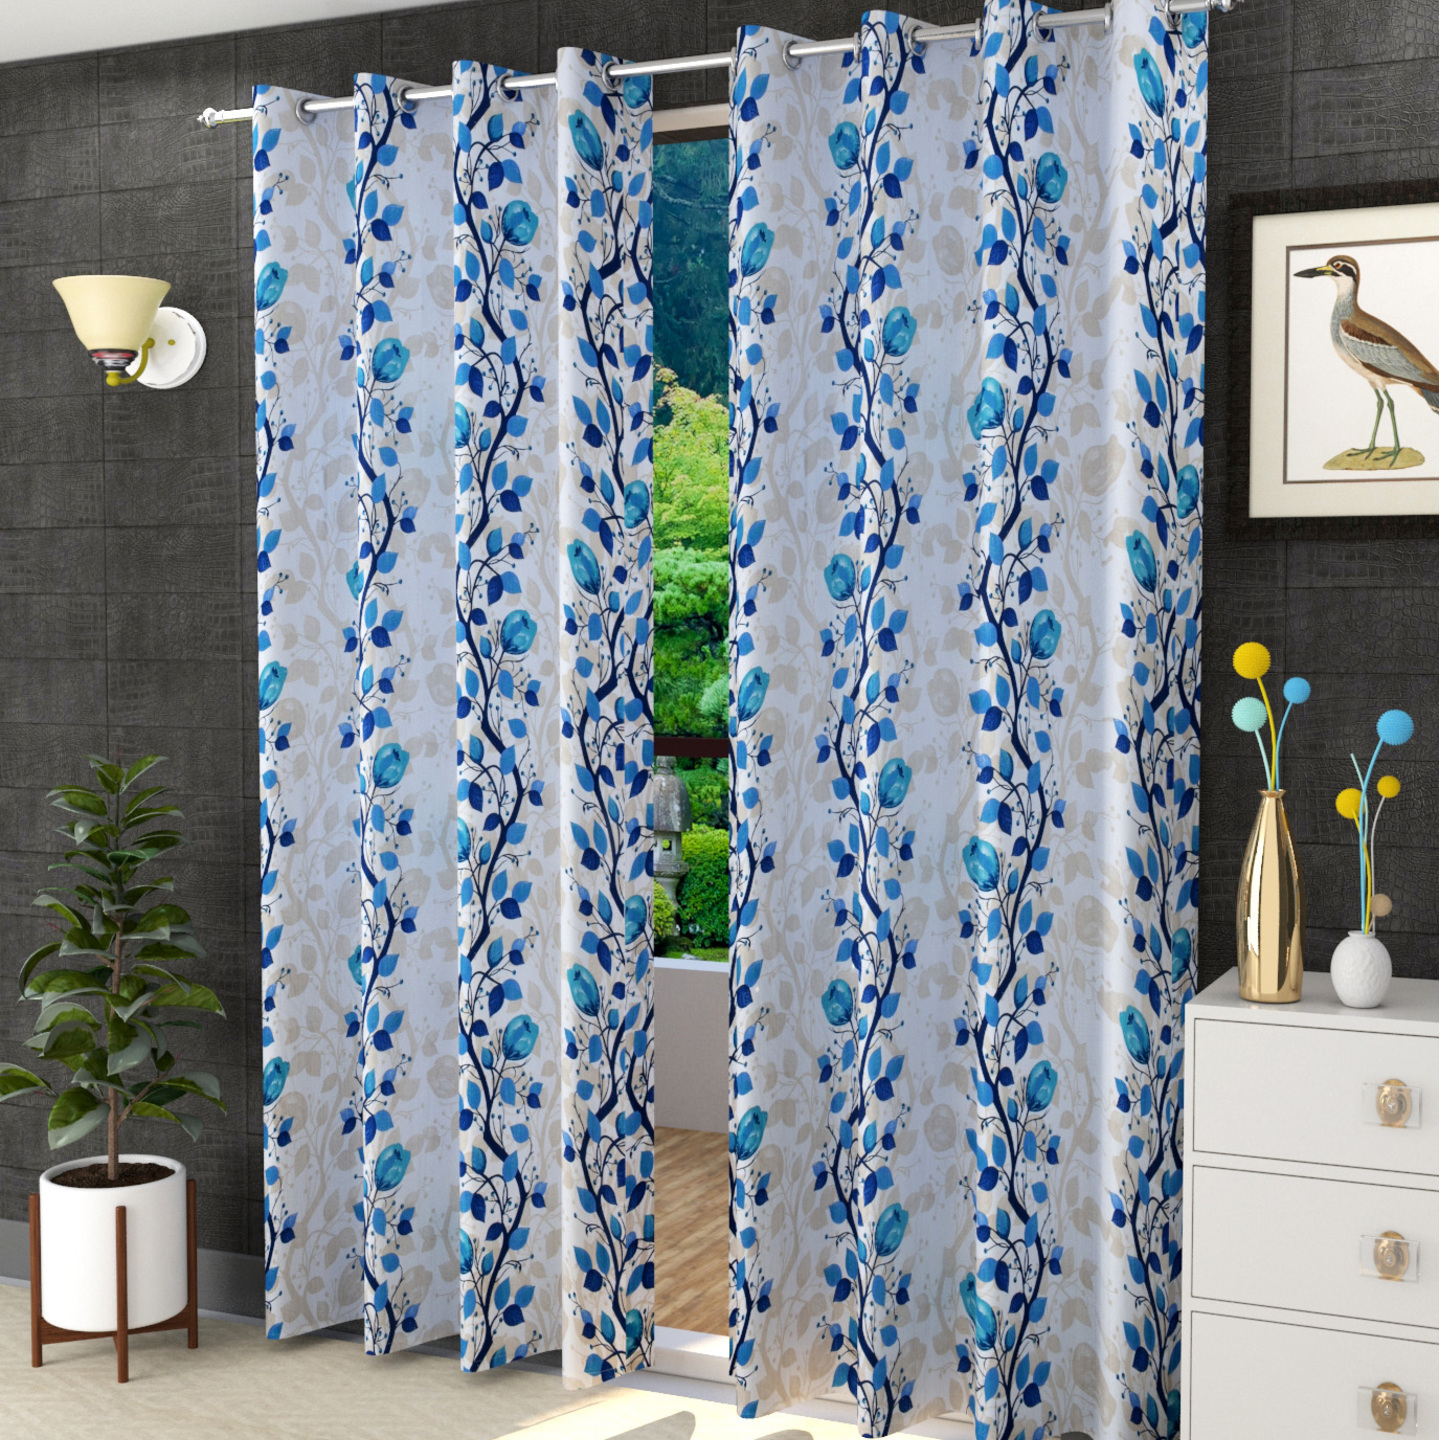  Handtex Home Long Crush Printed Curtains for Door 9 Feet Pack of 2,Aqua (Aqua, Door 9 Feet) 